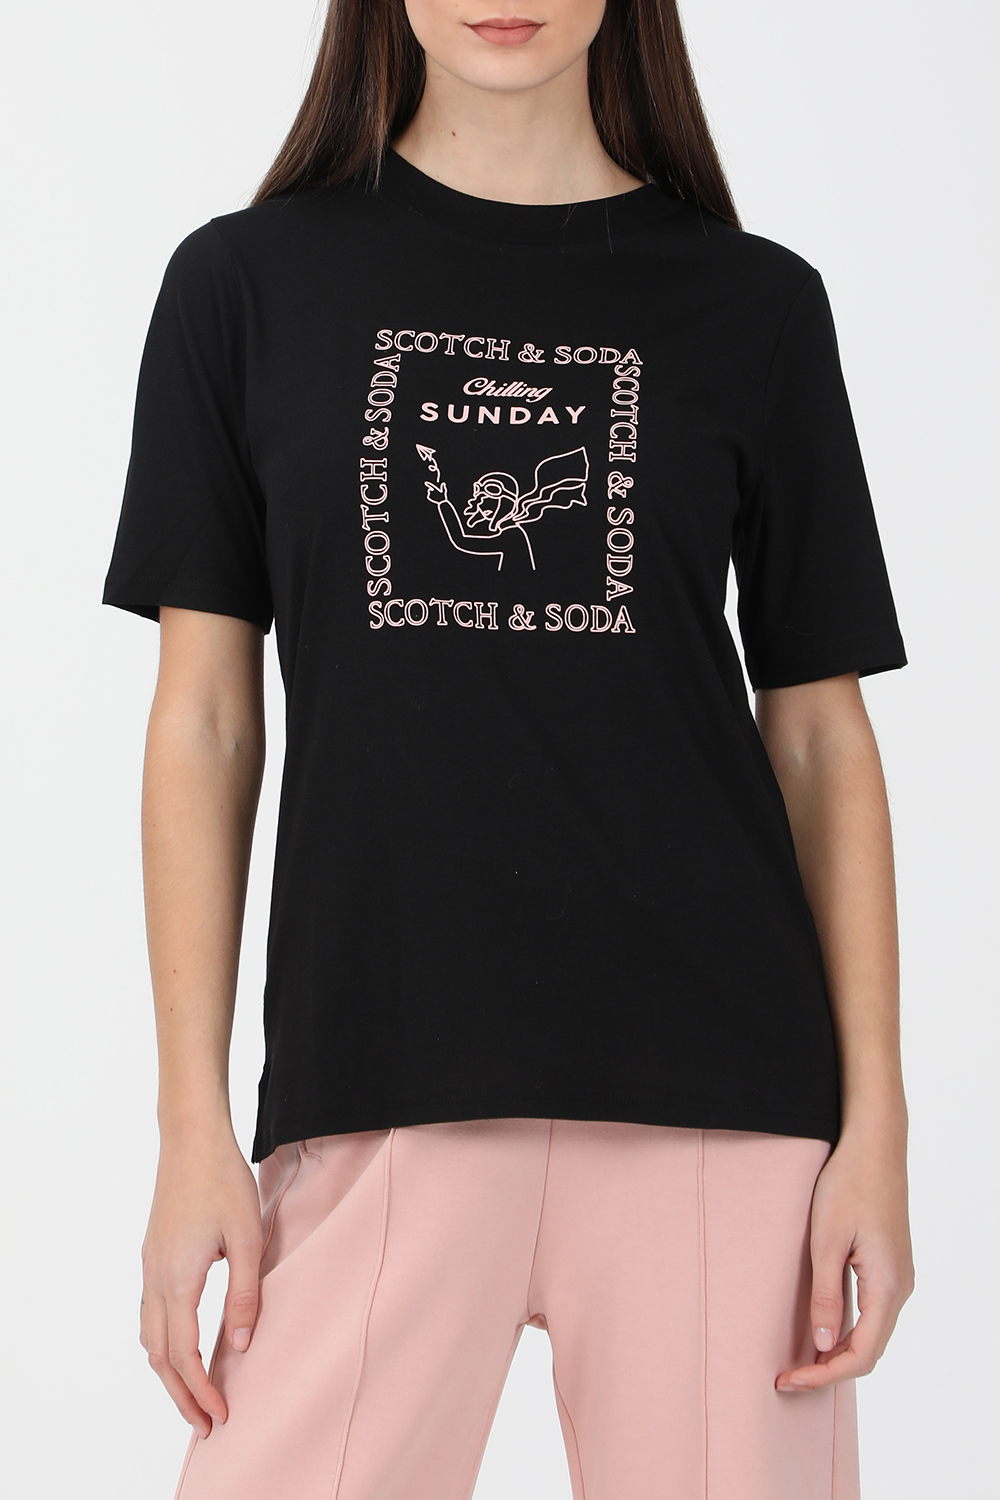 SCOTCH & SODA – Γυναικεια κοντομανικη μπλουζα SCOTCH & SODA μαυρη